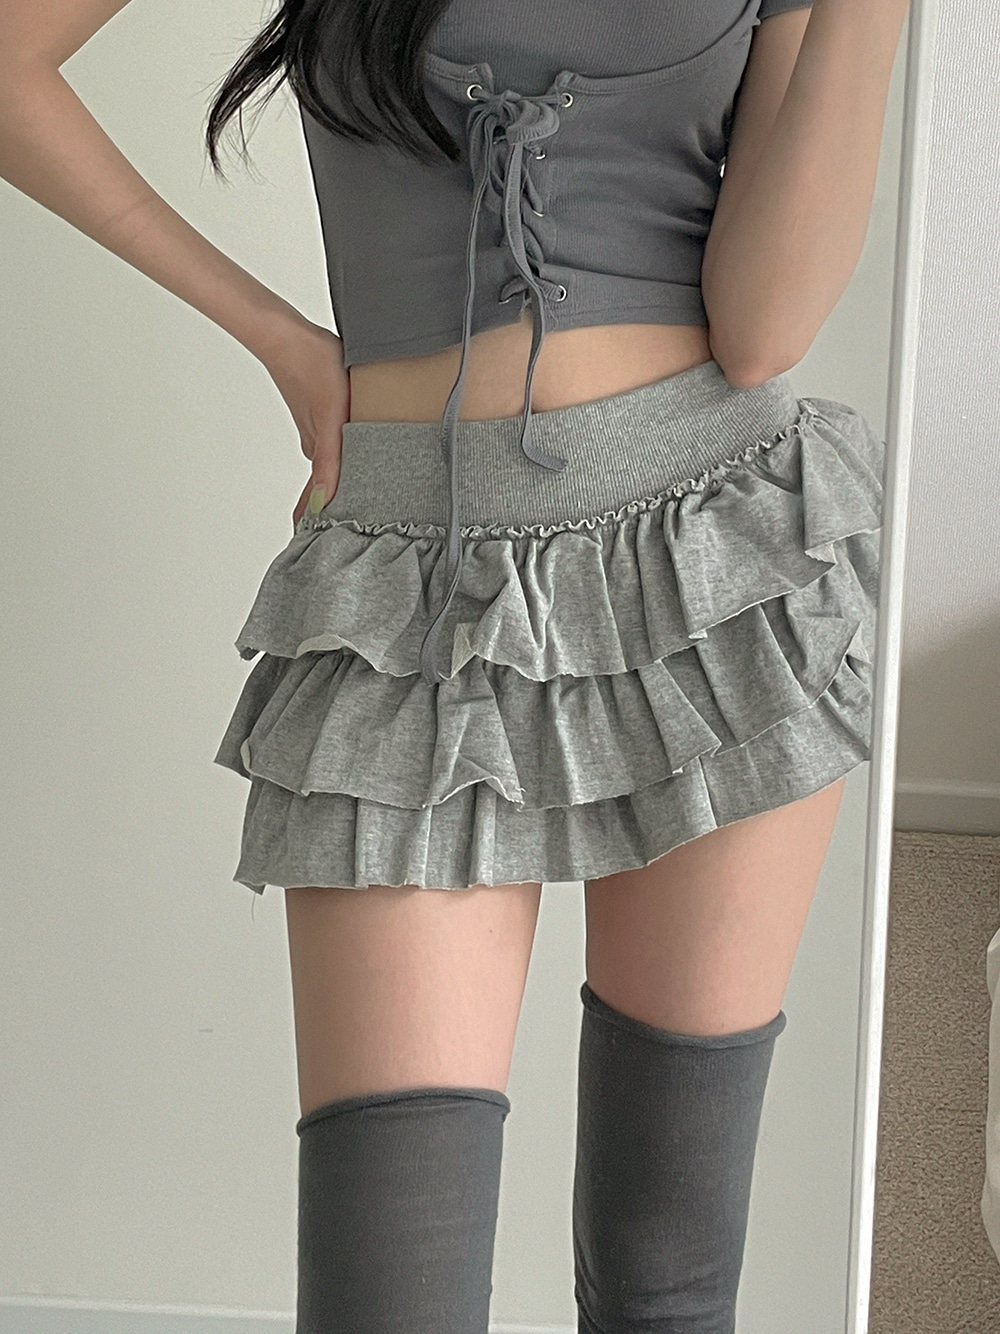 Bony mini cancan skirt